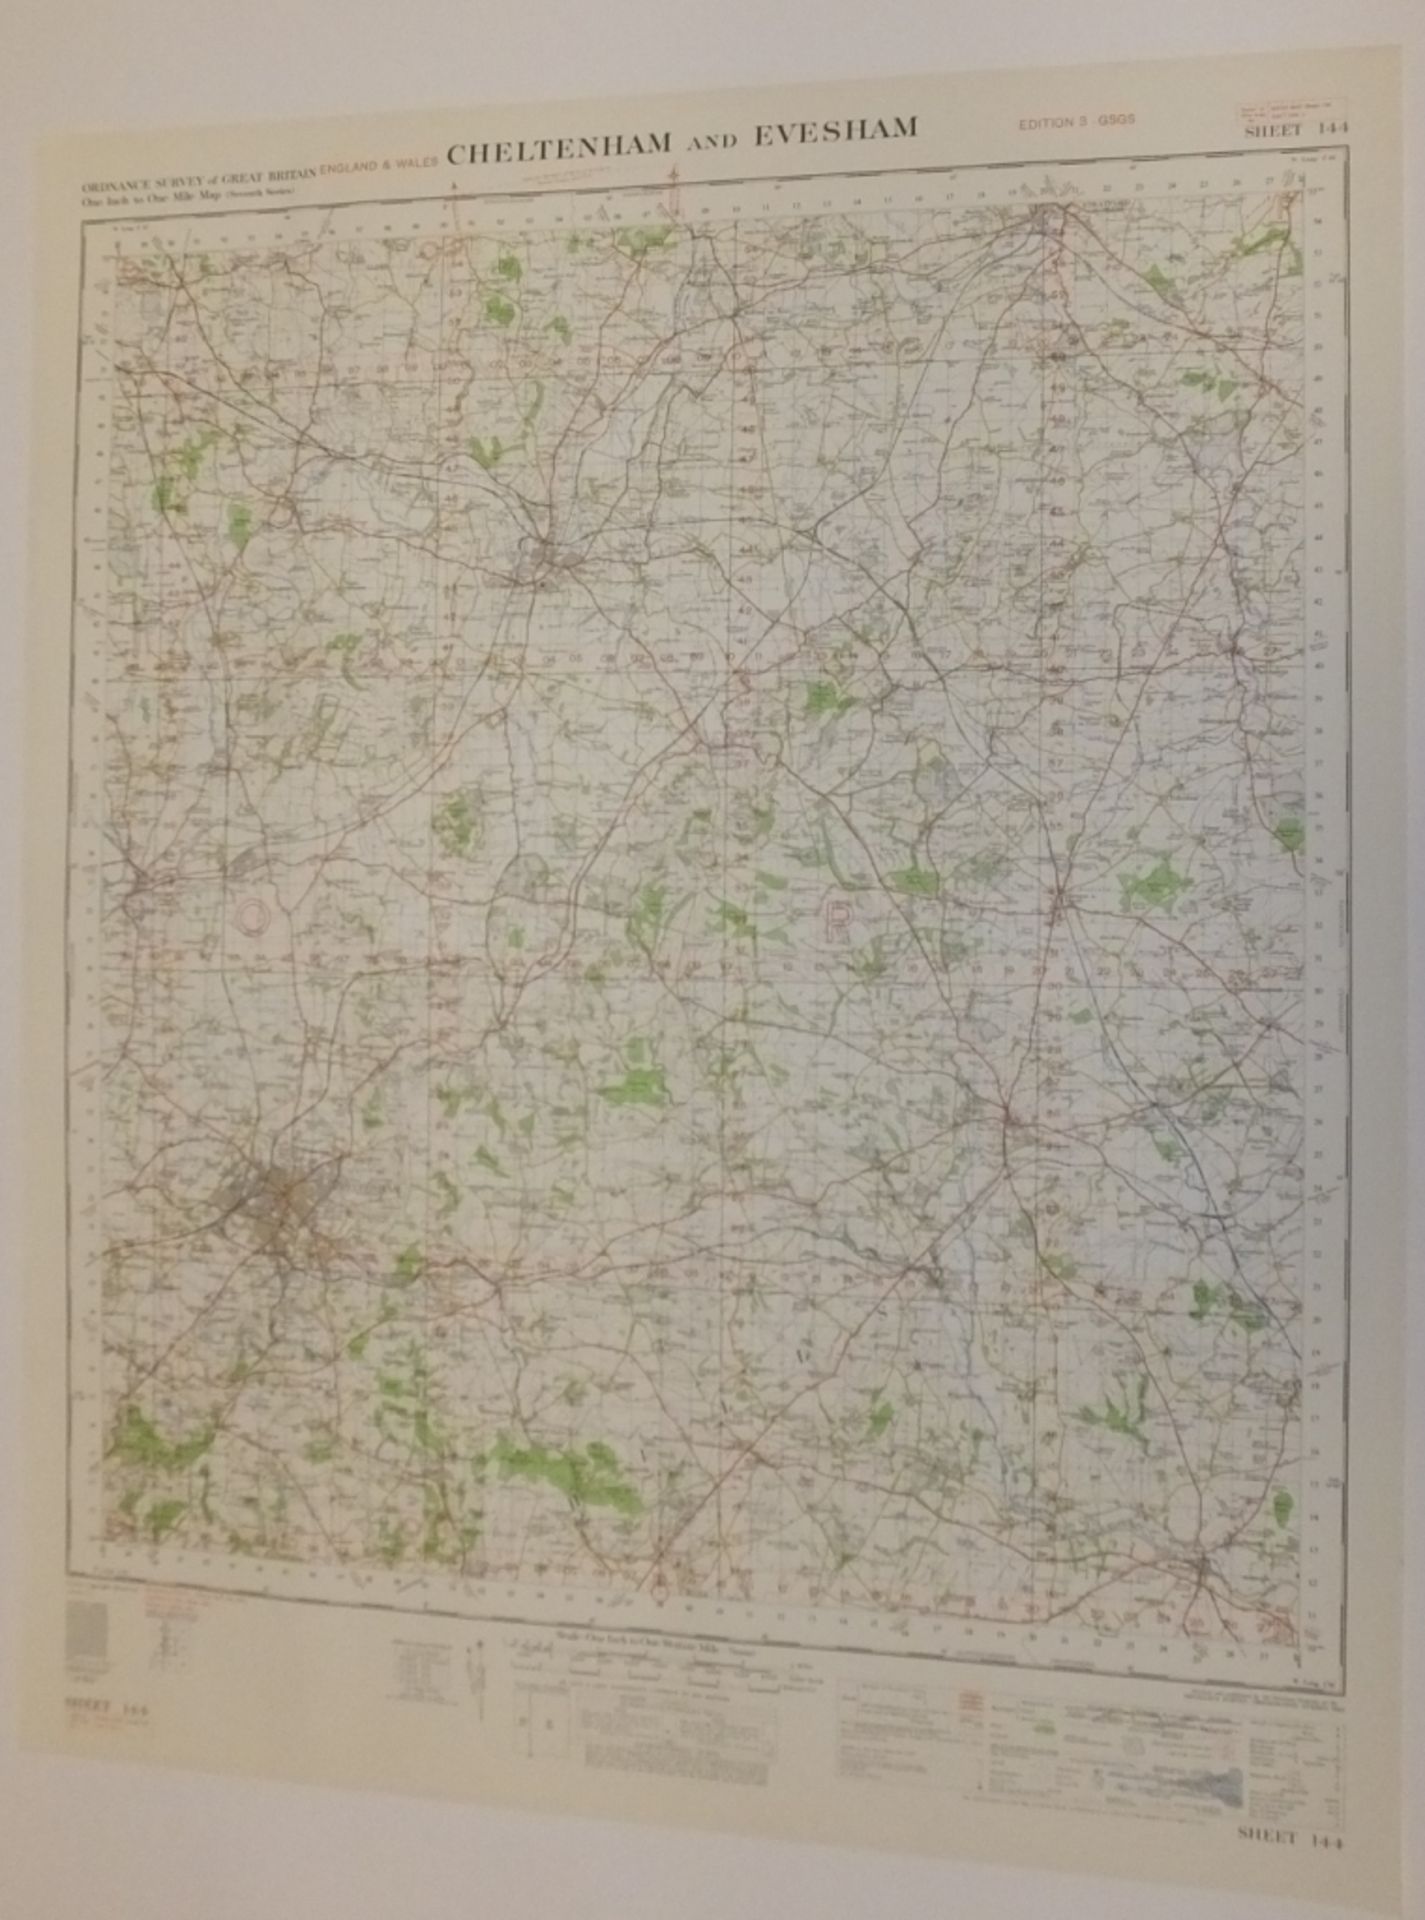 28x ENGLAND & WALES MAP CHELTENHAM EVESHAM 1INCH 1MILE 1955 7TH SERIES 3GSGS SHEET 144